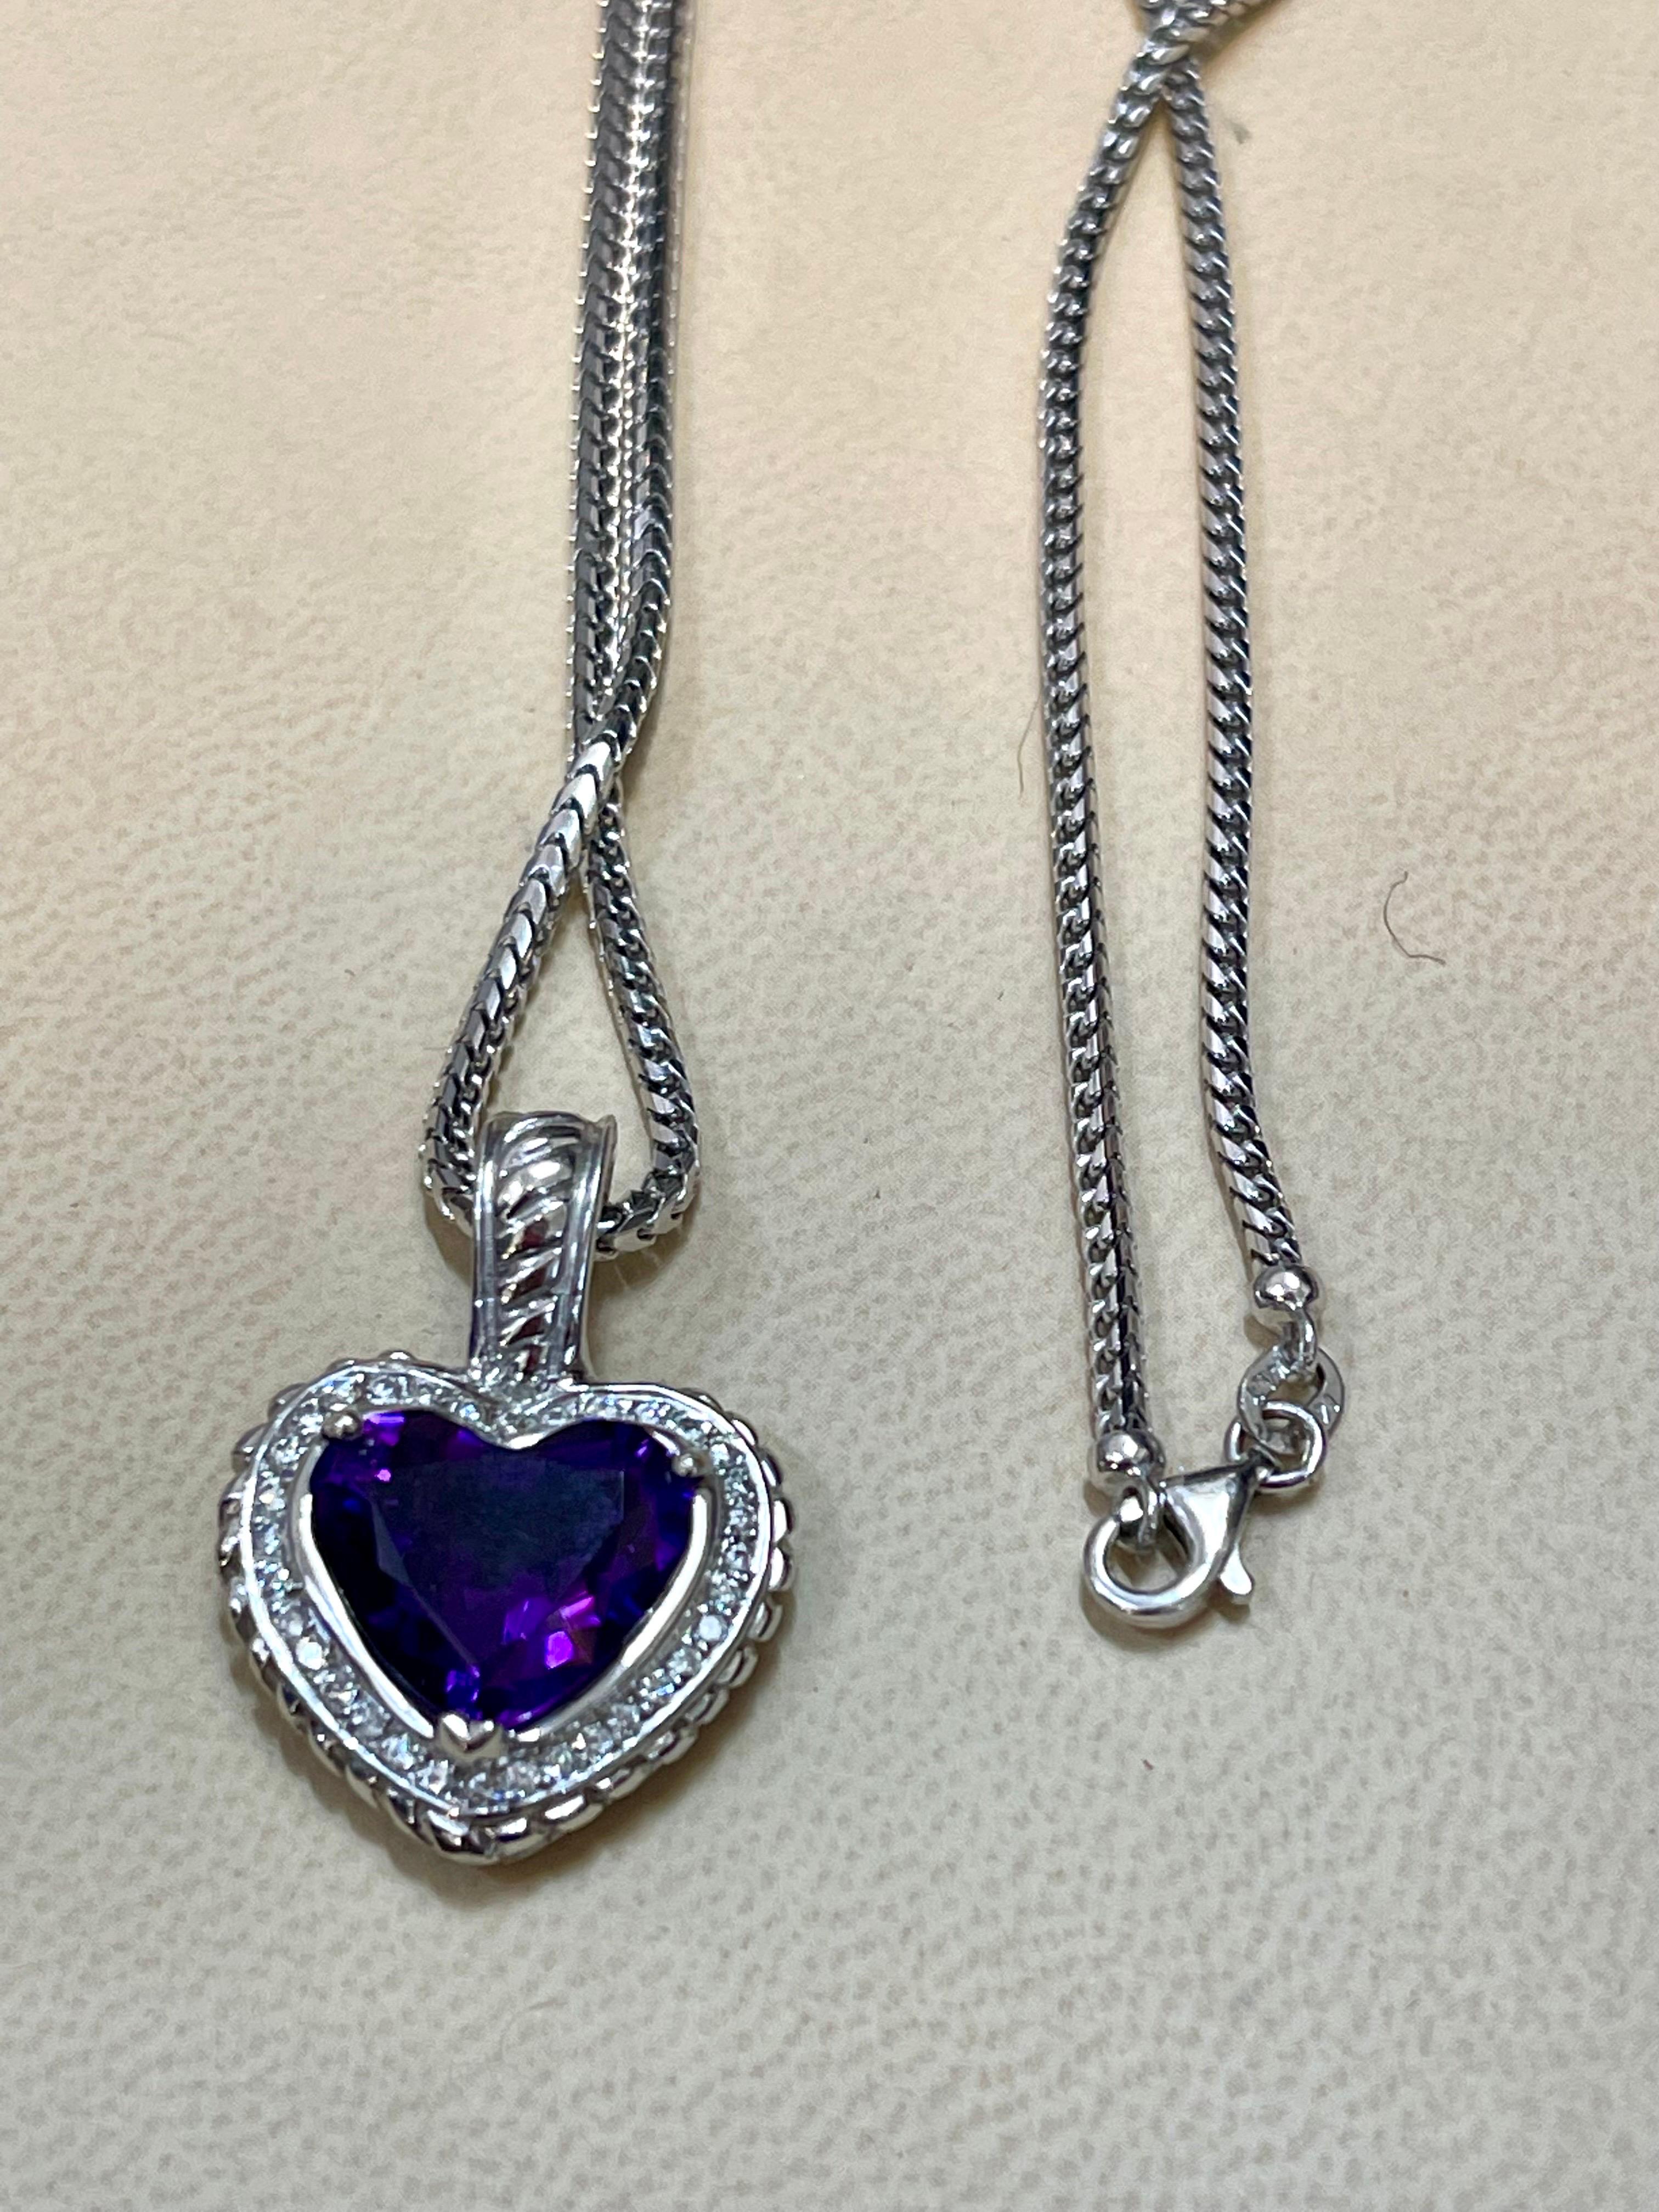 10 Carat Heart Shape Amethyst & 1 Ct Diamond Pendant Necklace 18 Kt White Gold 3